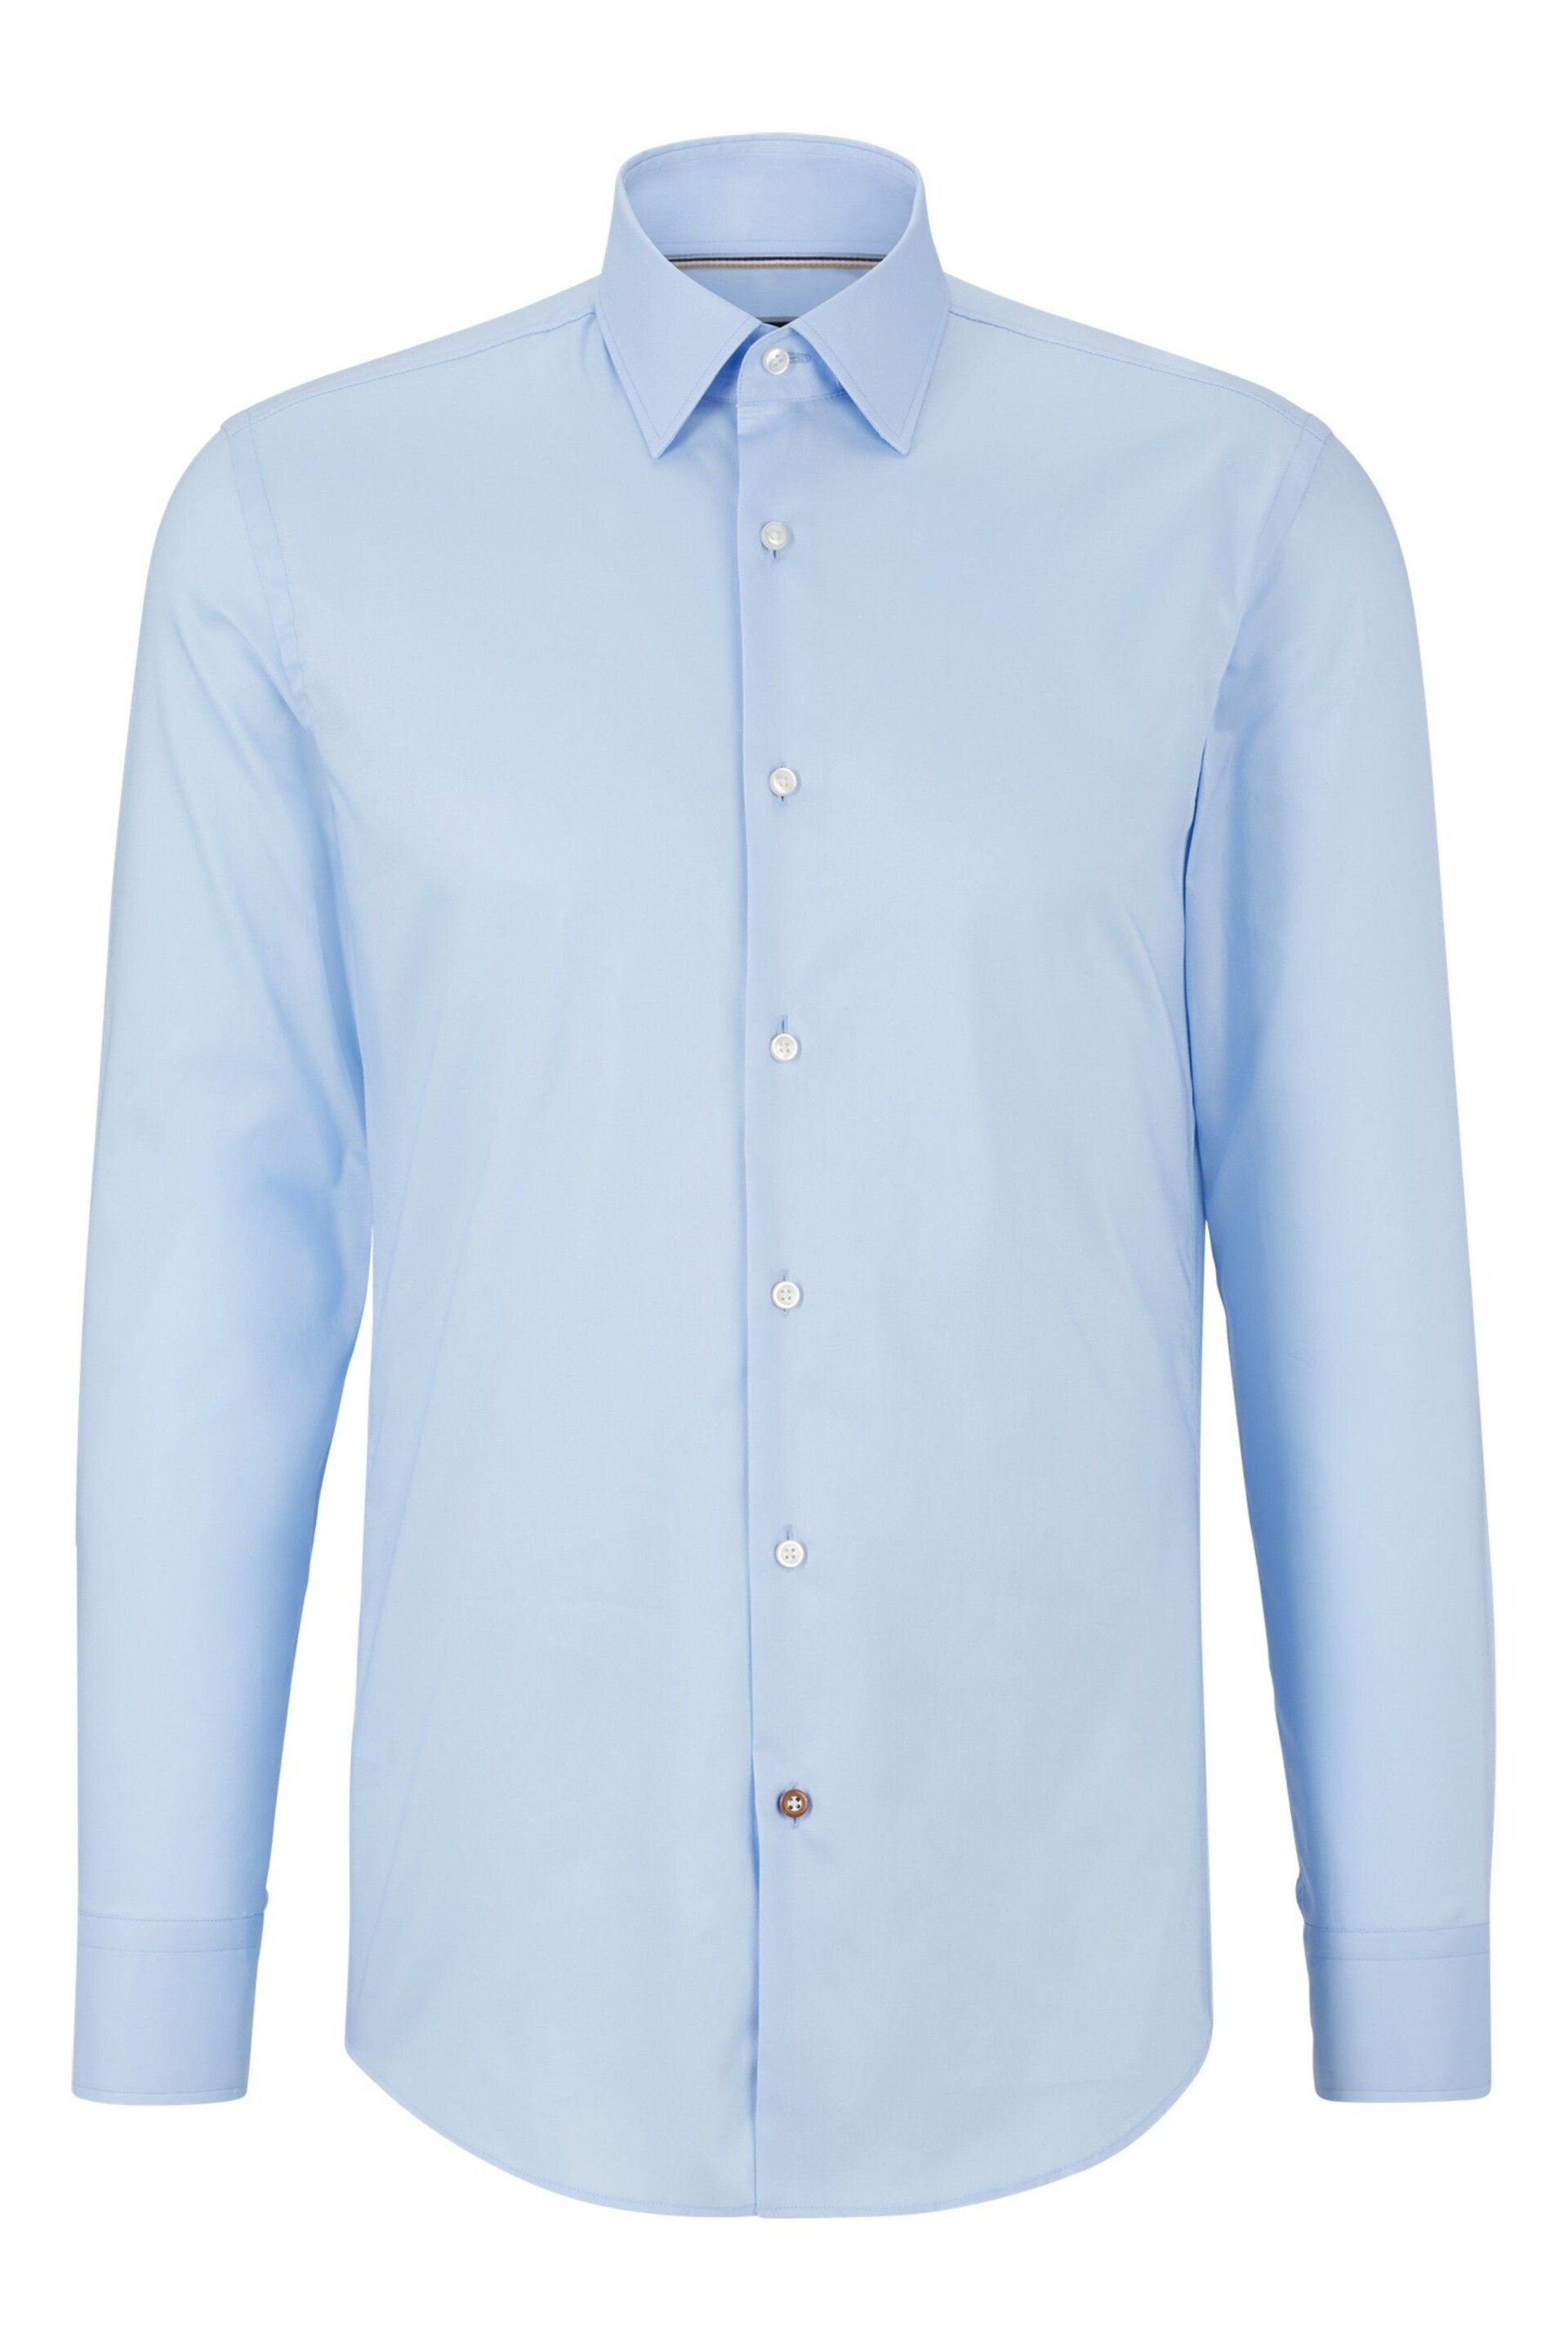 BOSS Blue Slim Fit Dress Shirt - Image 6 of 6